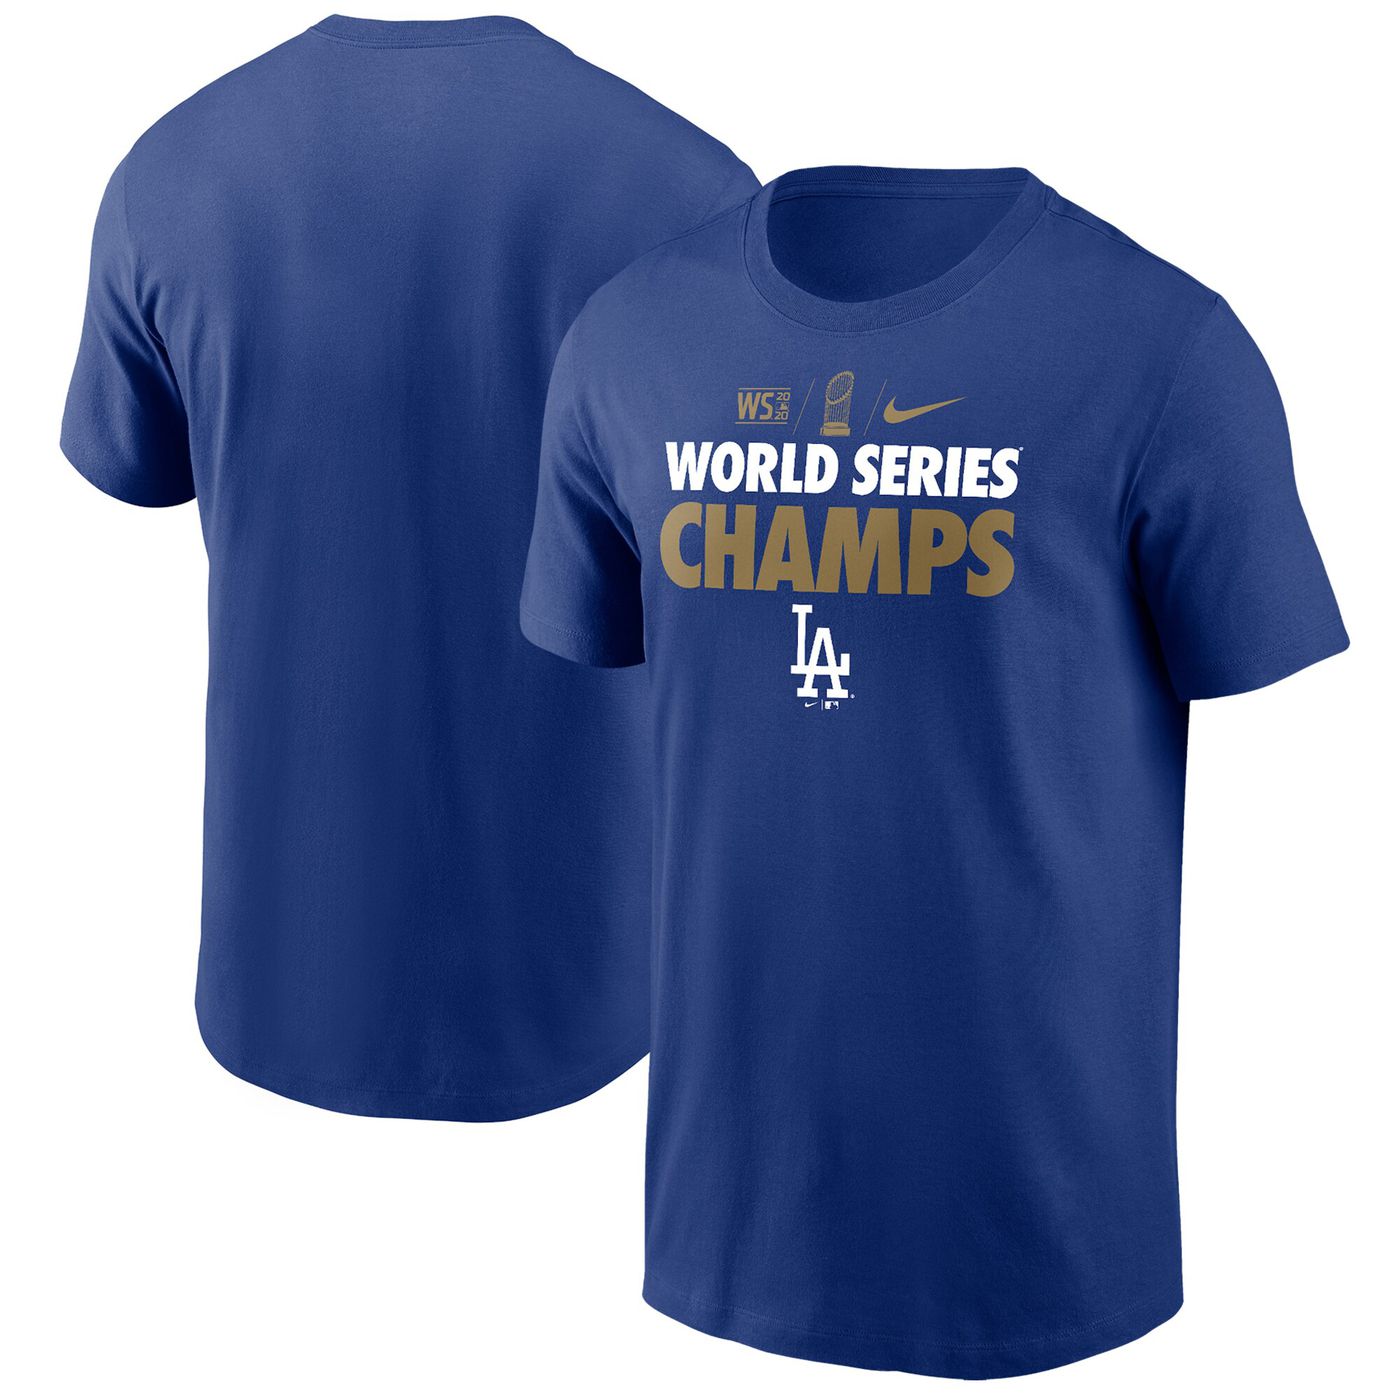 LA Dodgers 2020 World Series merch: T-shirts, hoodies, and 